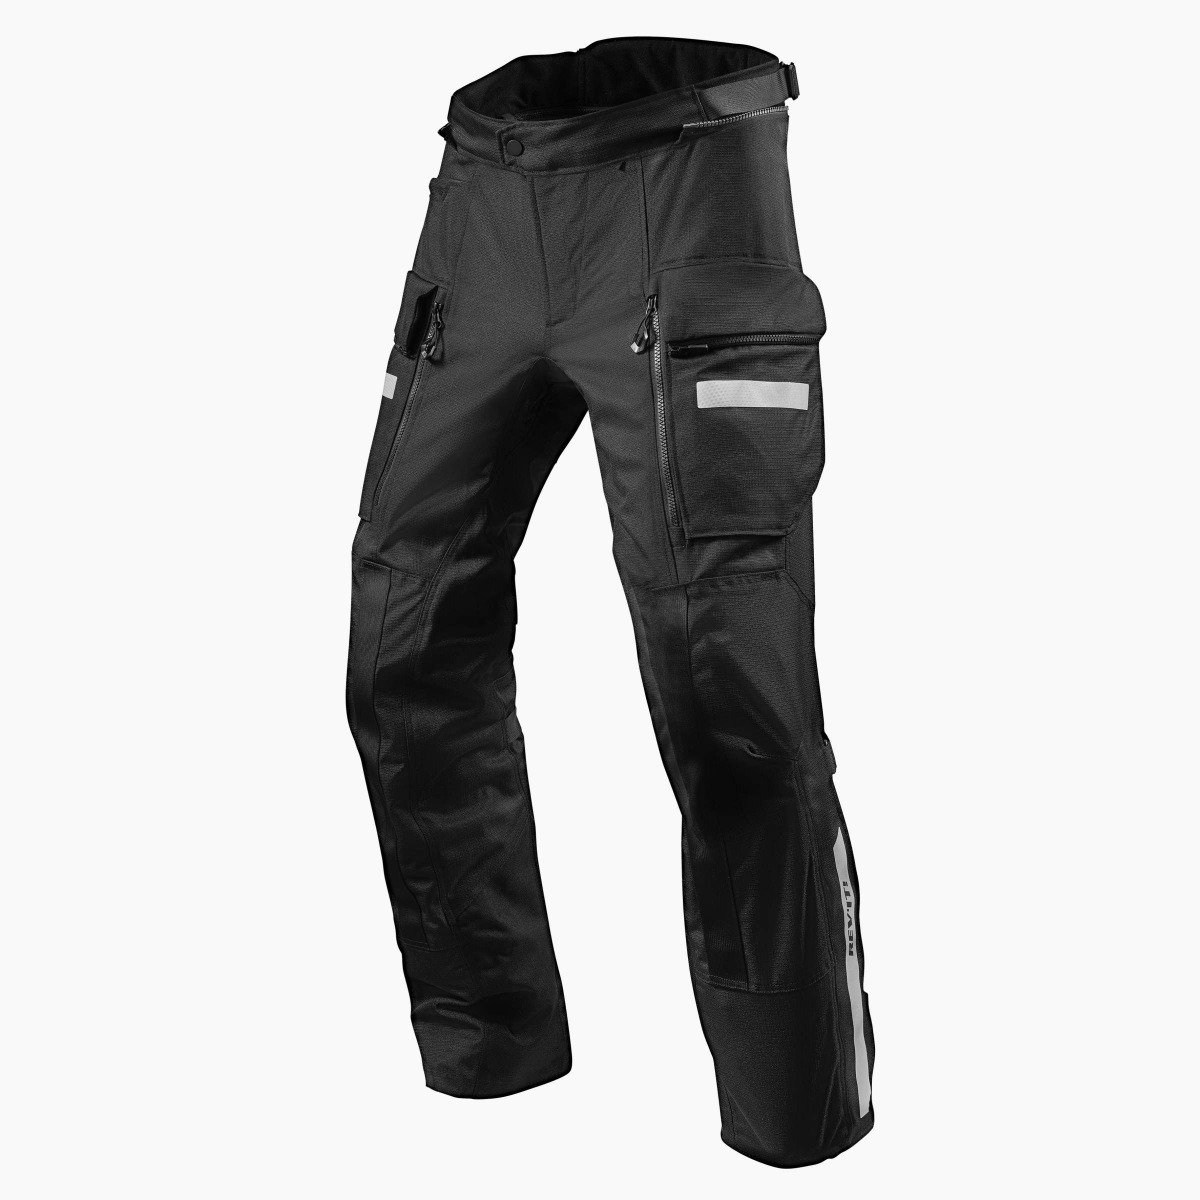 Image of REV'IT! Sand 4 H2O Standard Black Motorcycle Pants Talla 2XL